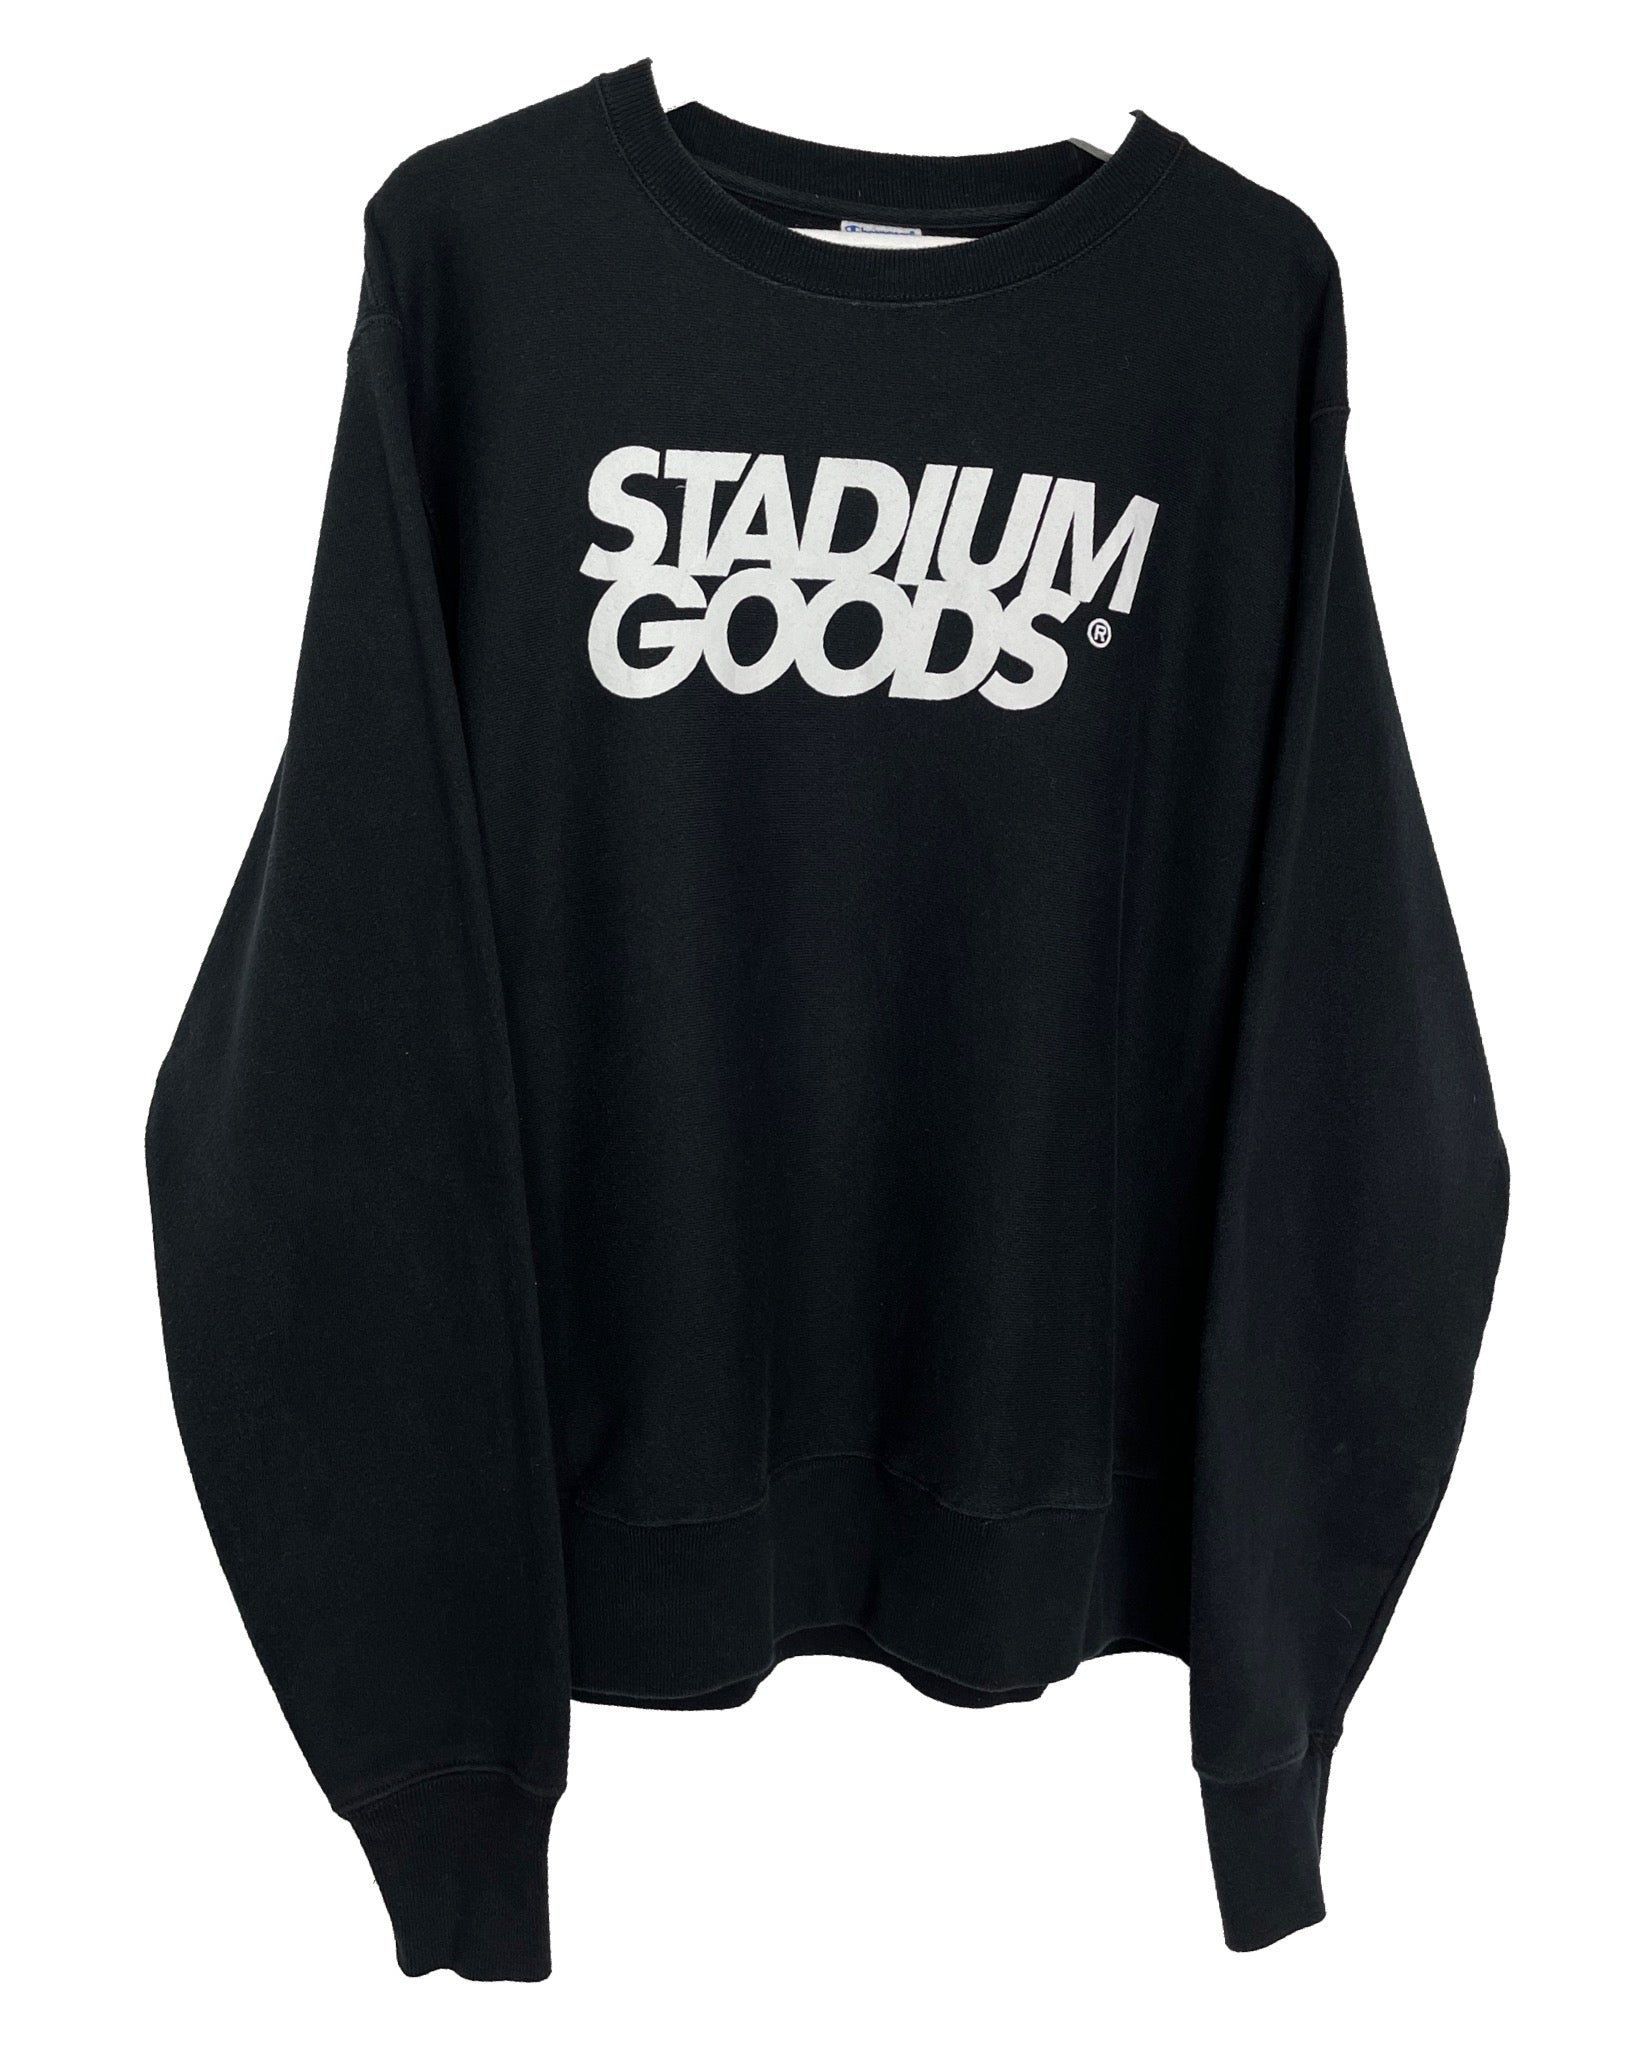  Sweatshirt Champion Sweat - Stadium Goods - M - PLOMOSTORE